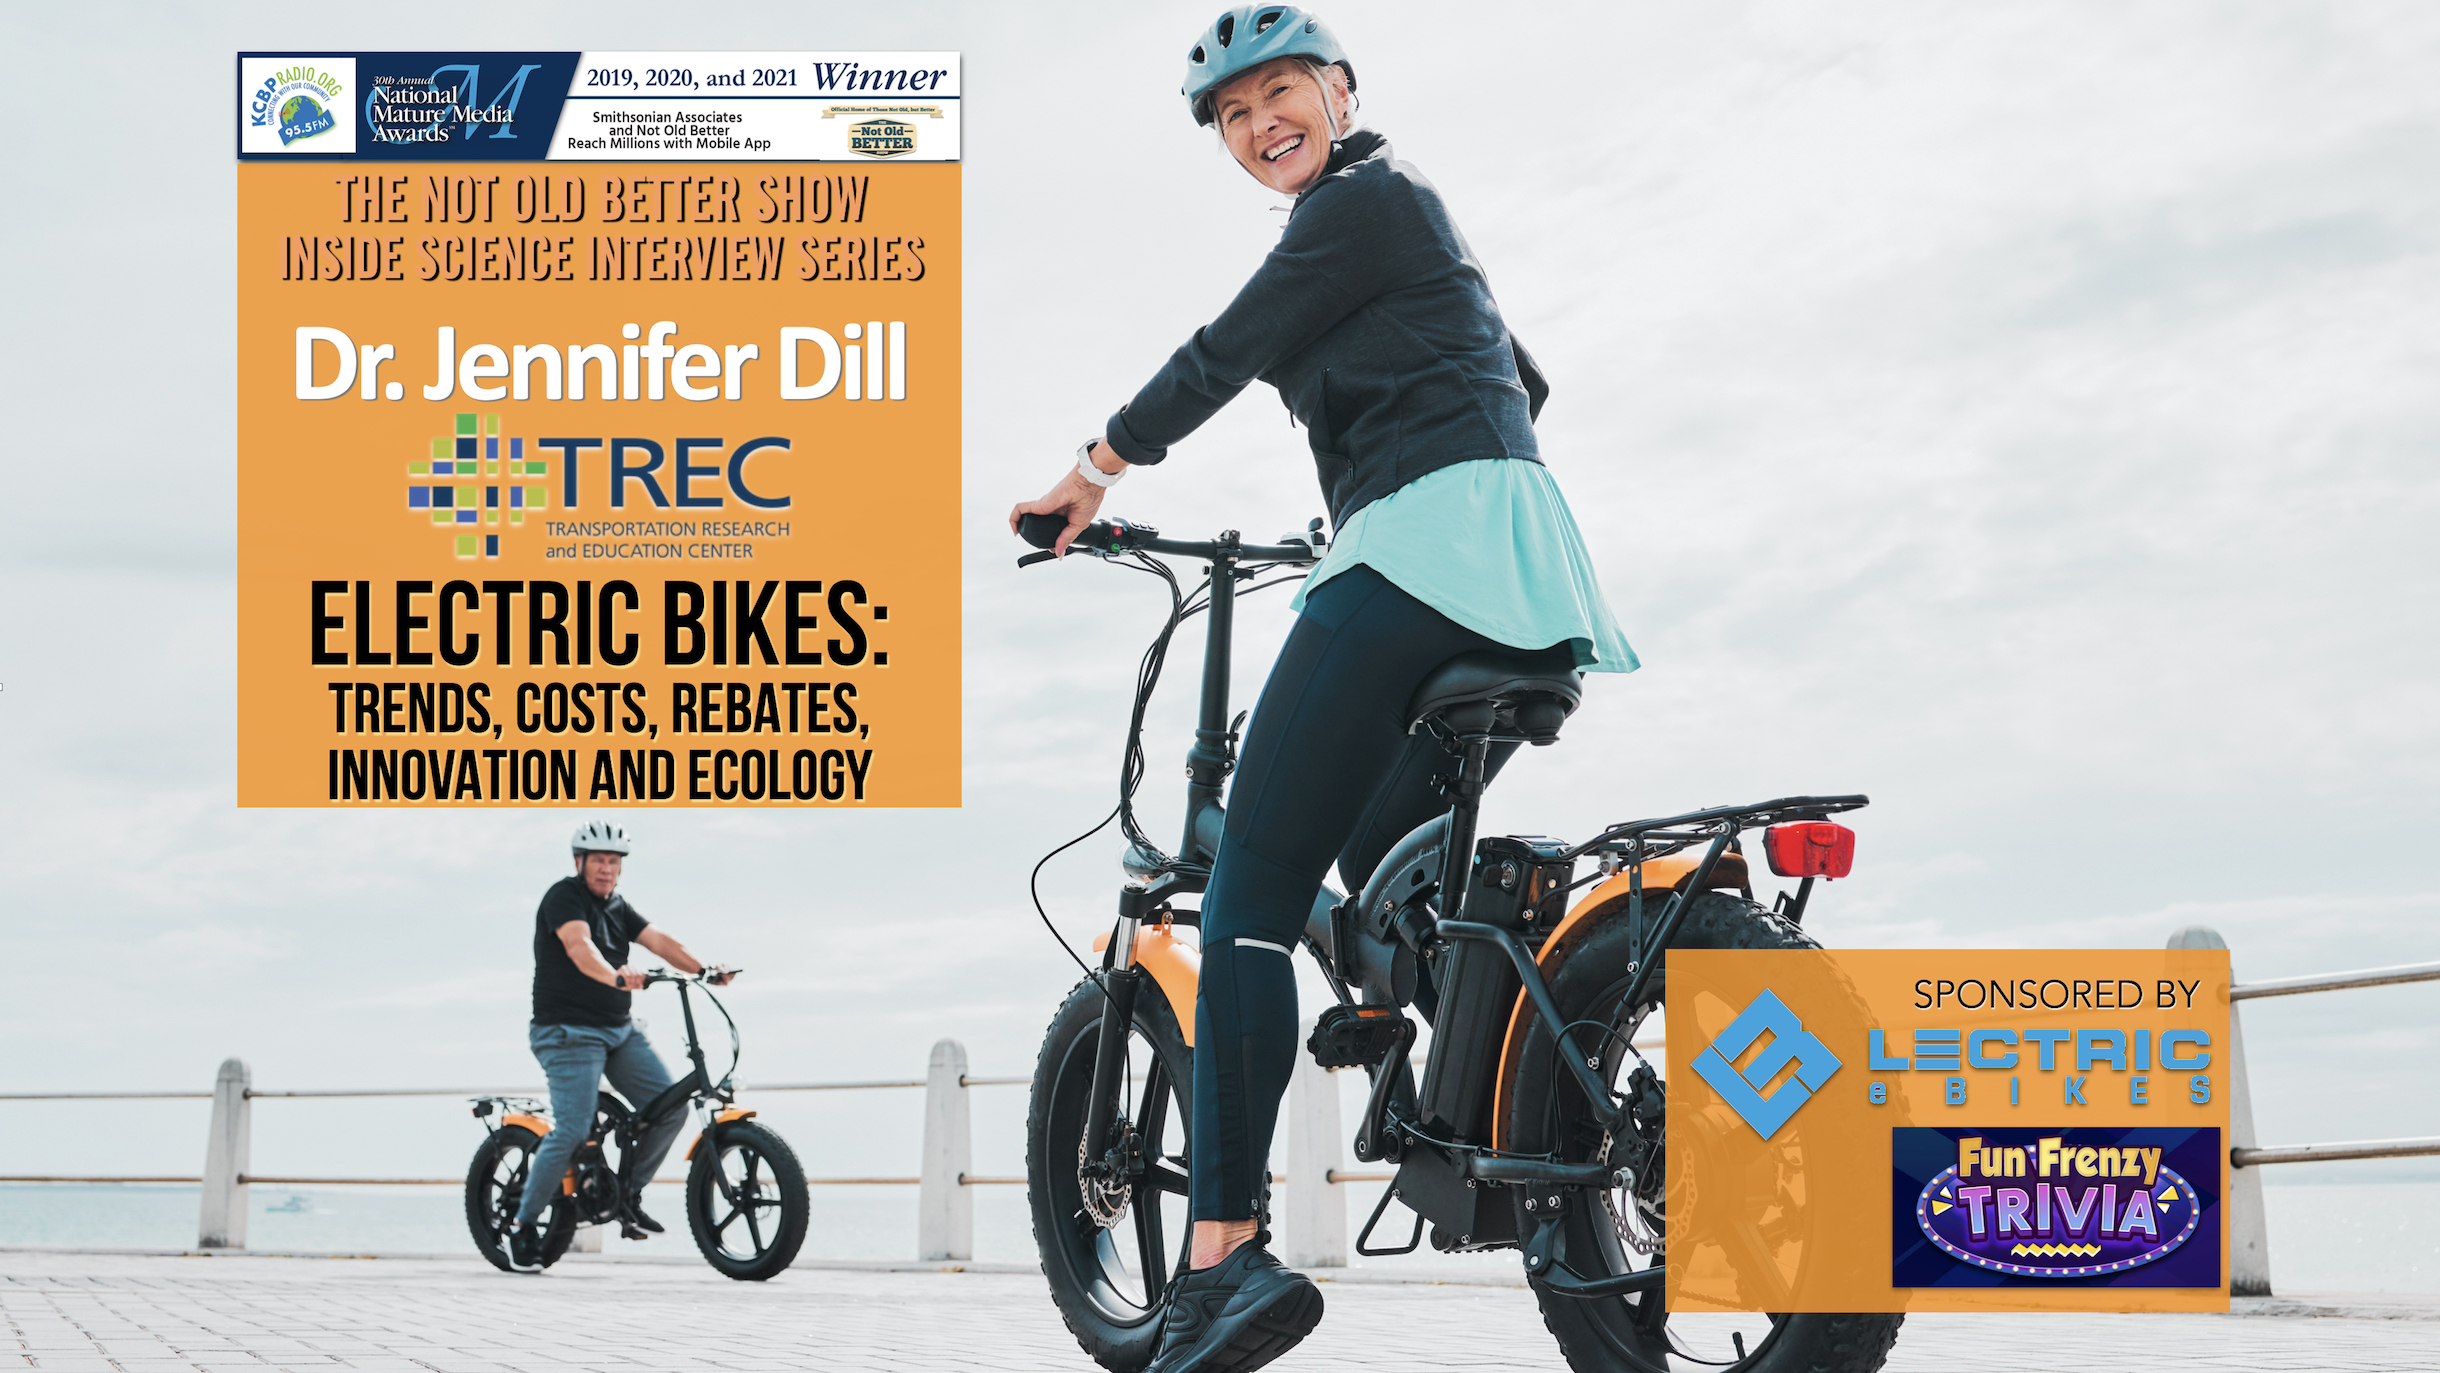 Jennifer Dill: TREC – Electric Bikes: Trends, Costs, Rebates, & Ecology